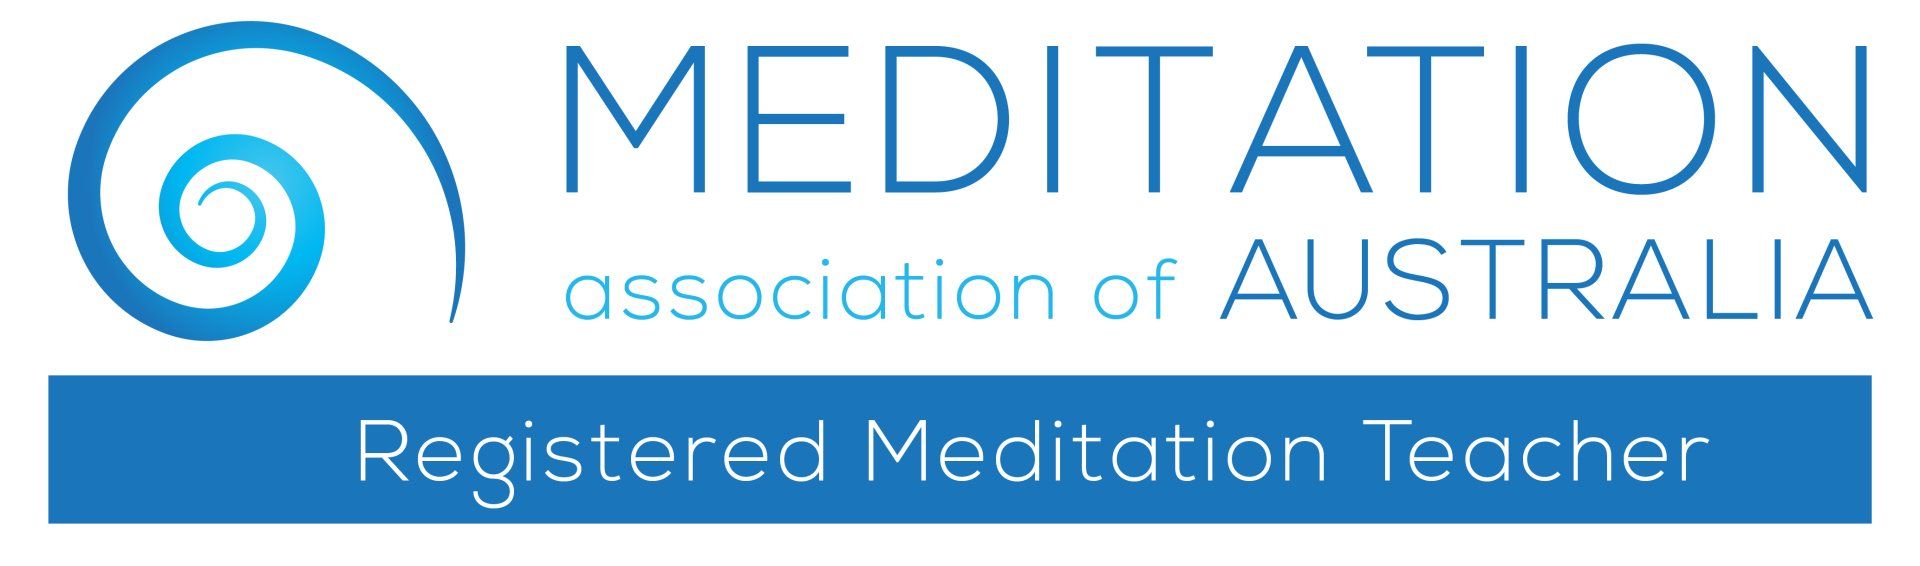 Meditation Association of Australia Logo